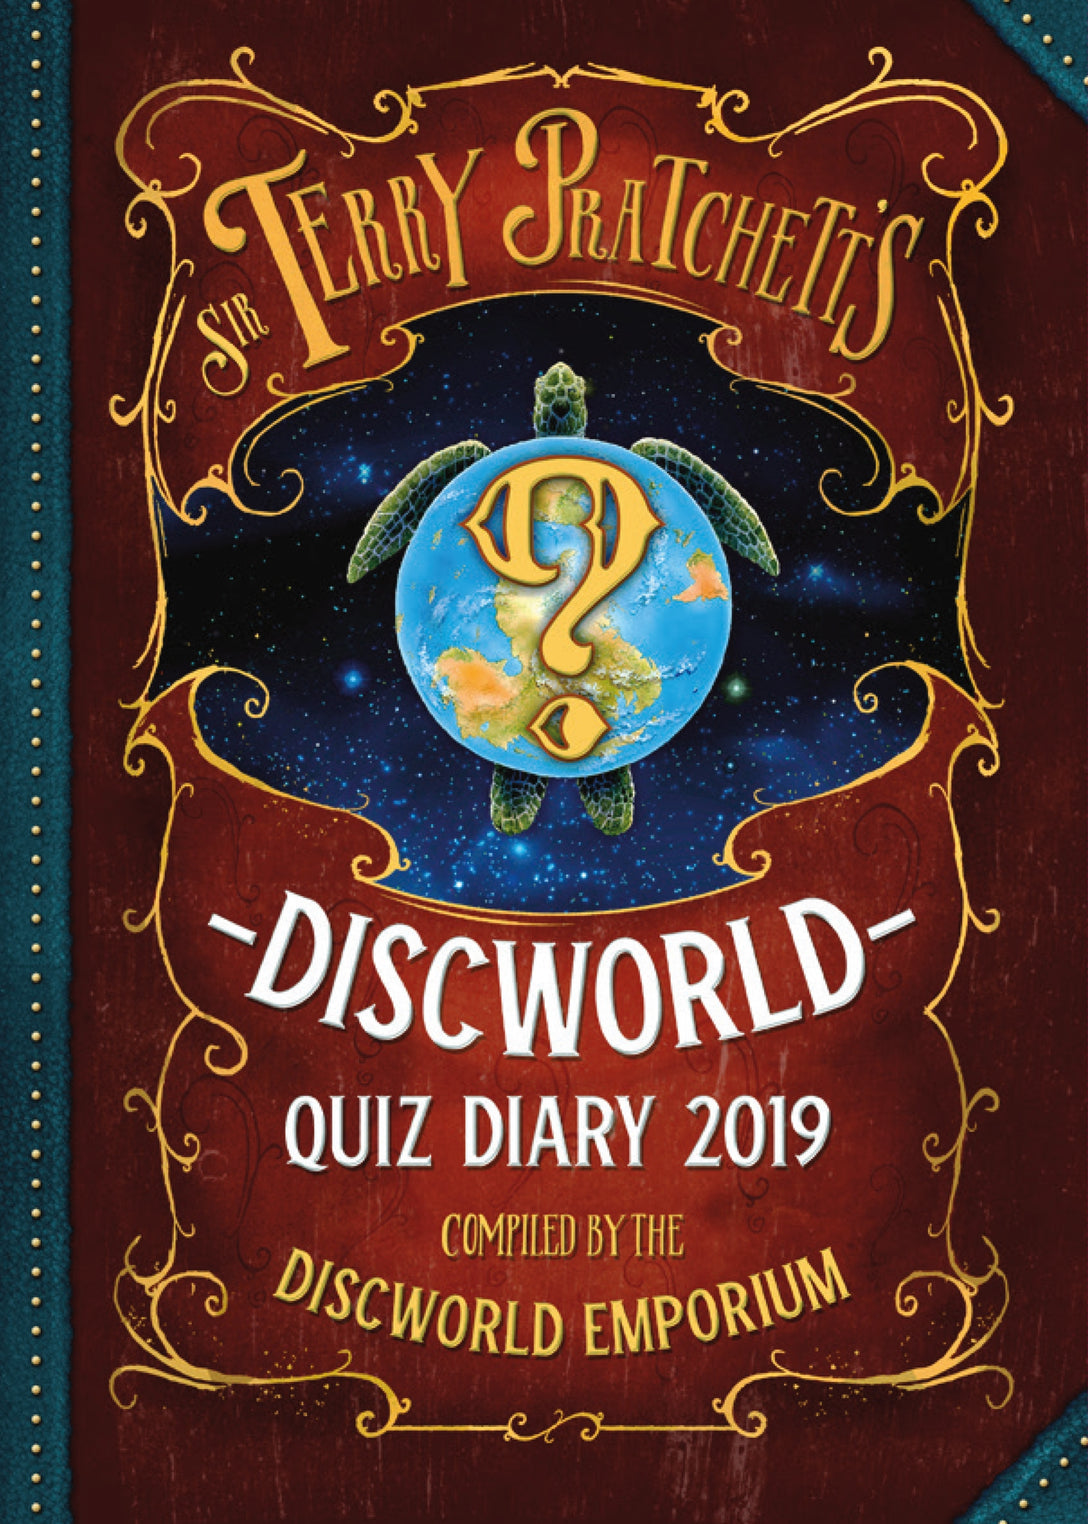 Terry Pratchett's Discworld Diary 2019 by Terry Pratchett, The Discworld Emporium